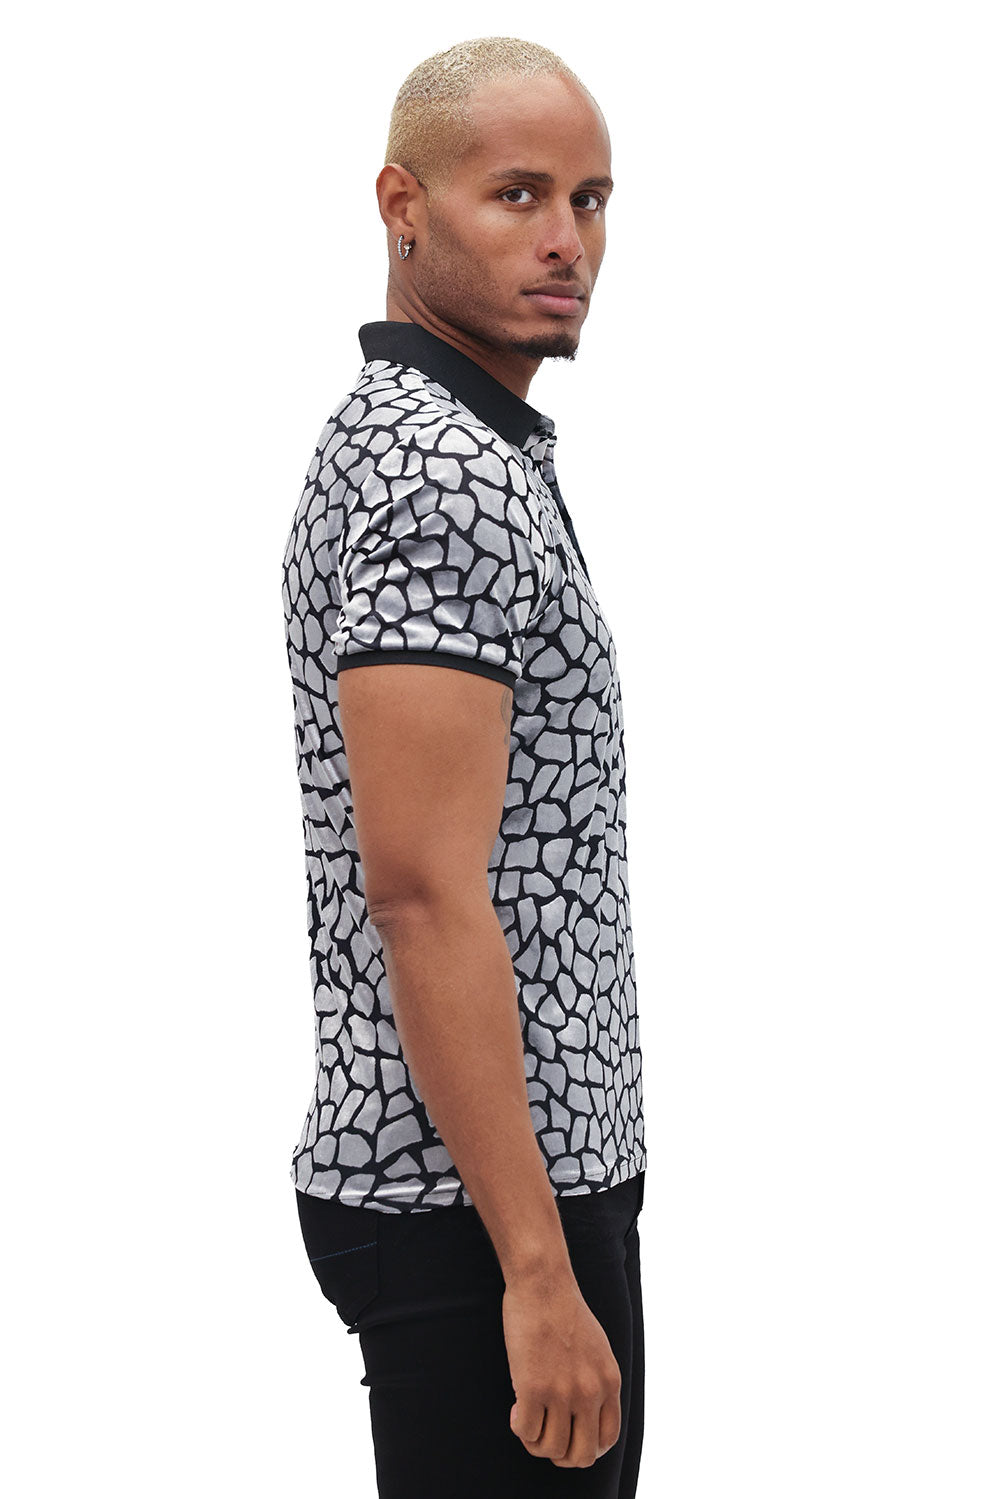 BARABAS Men's Leopard See Through Short Sleeve Polo Shirts 3PP838 Black Silver